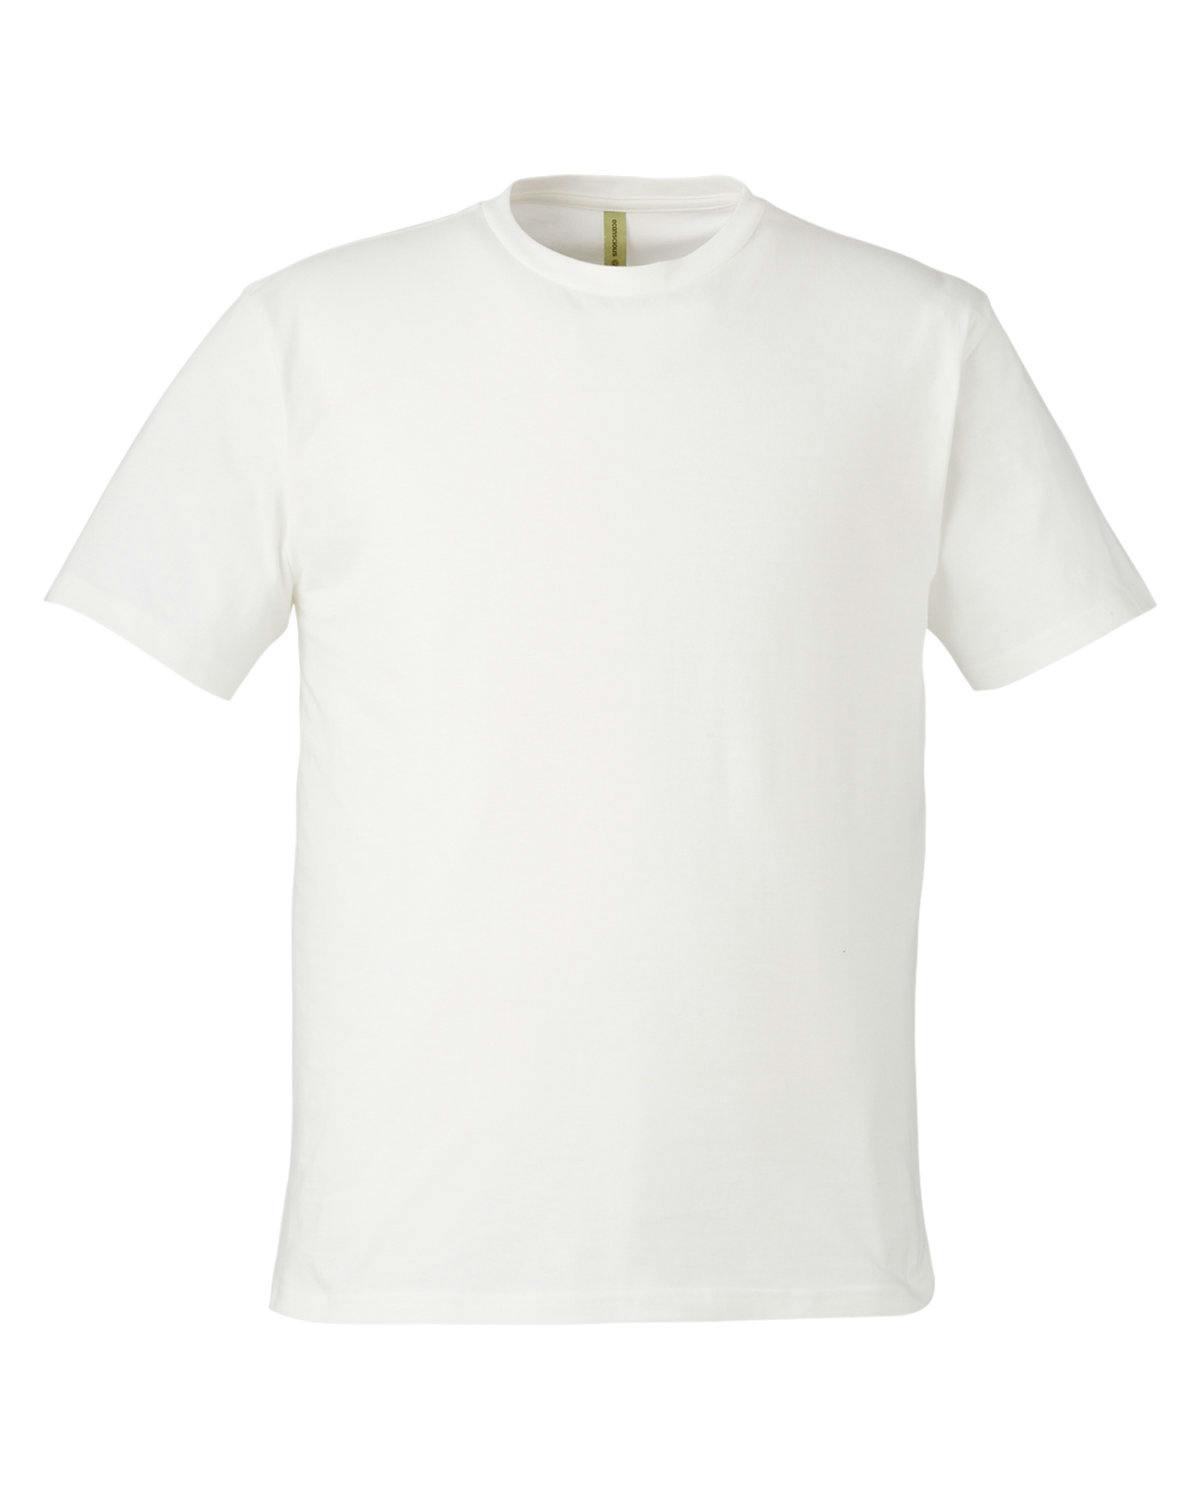 Image for Unisex Reclaimist Vibes T-Shirt